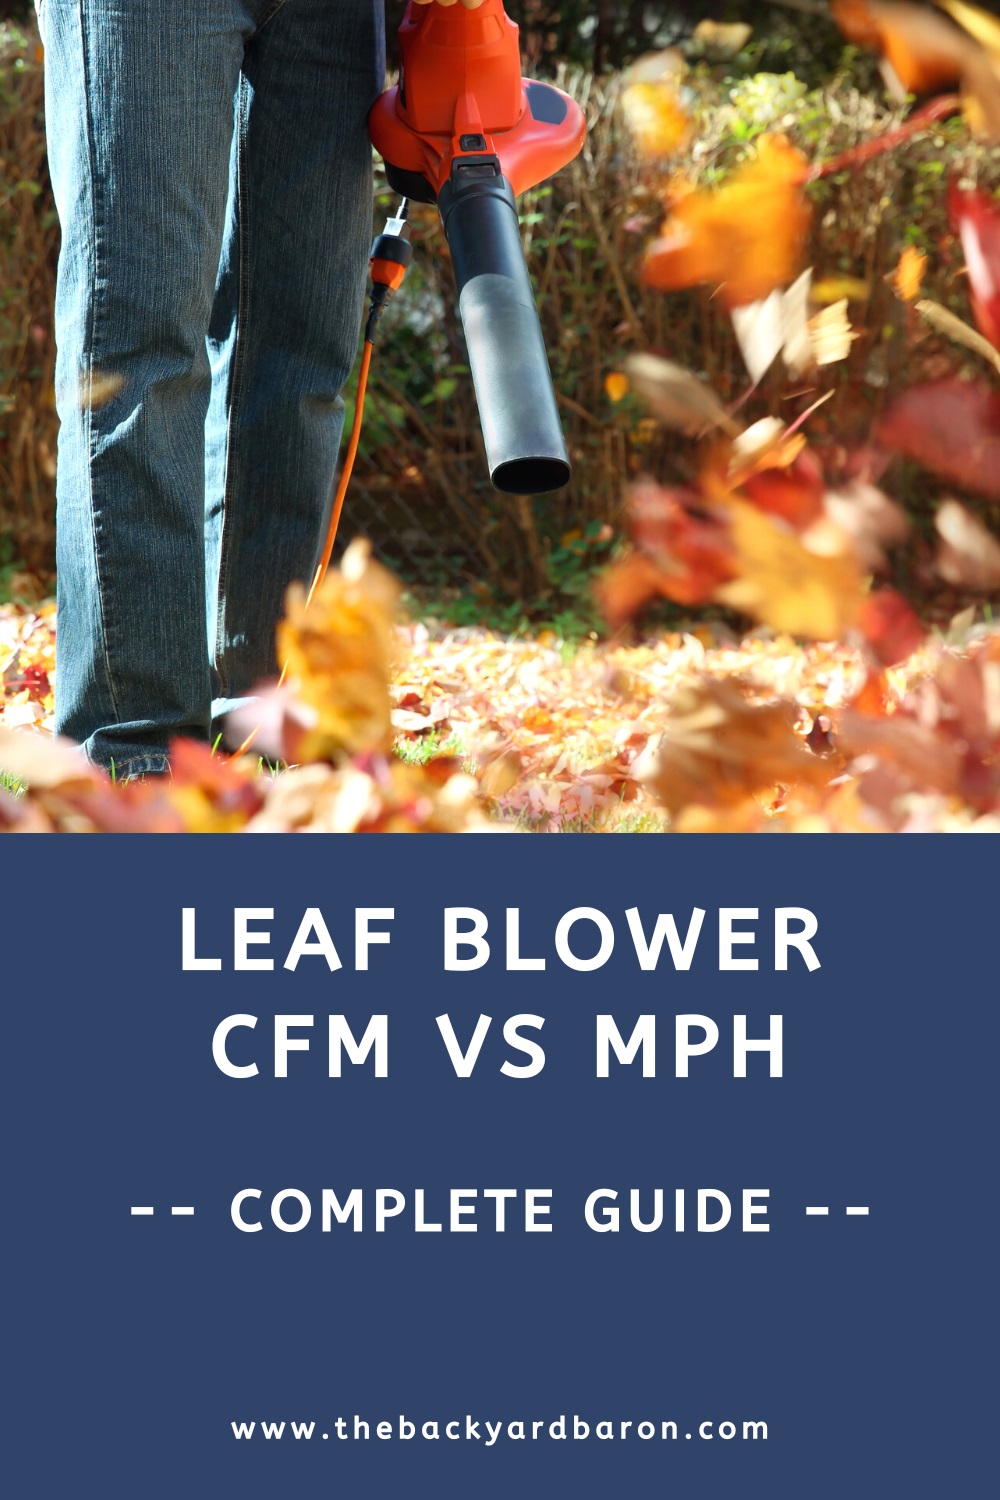 Leaf blower CFM vs MPH (complete guide)